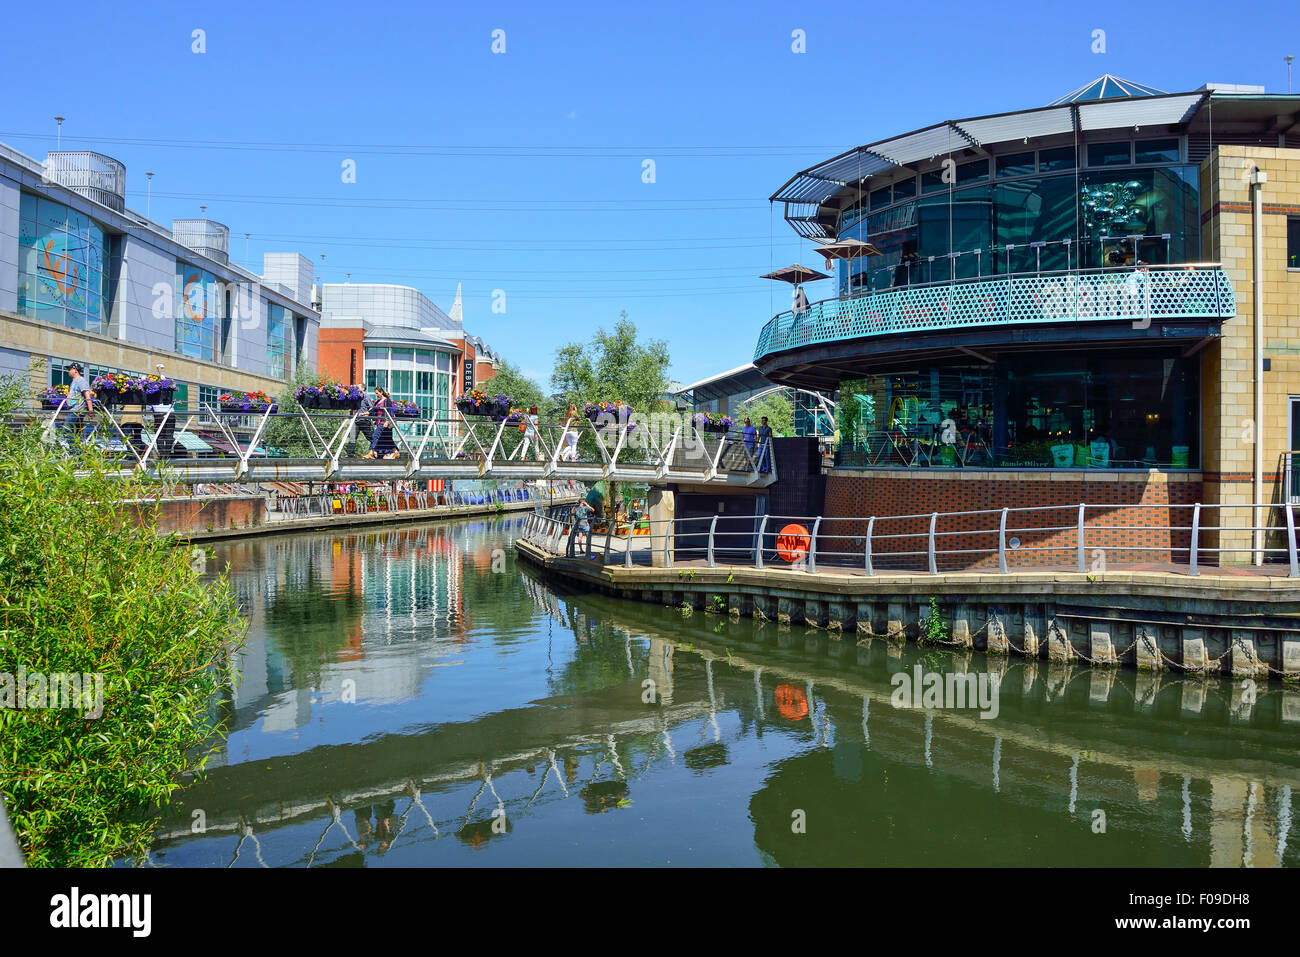 Riverside Level of The Oracle Shopping Centre, Reading, Berkshire, England, United Kingdom Stock Photo